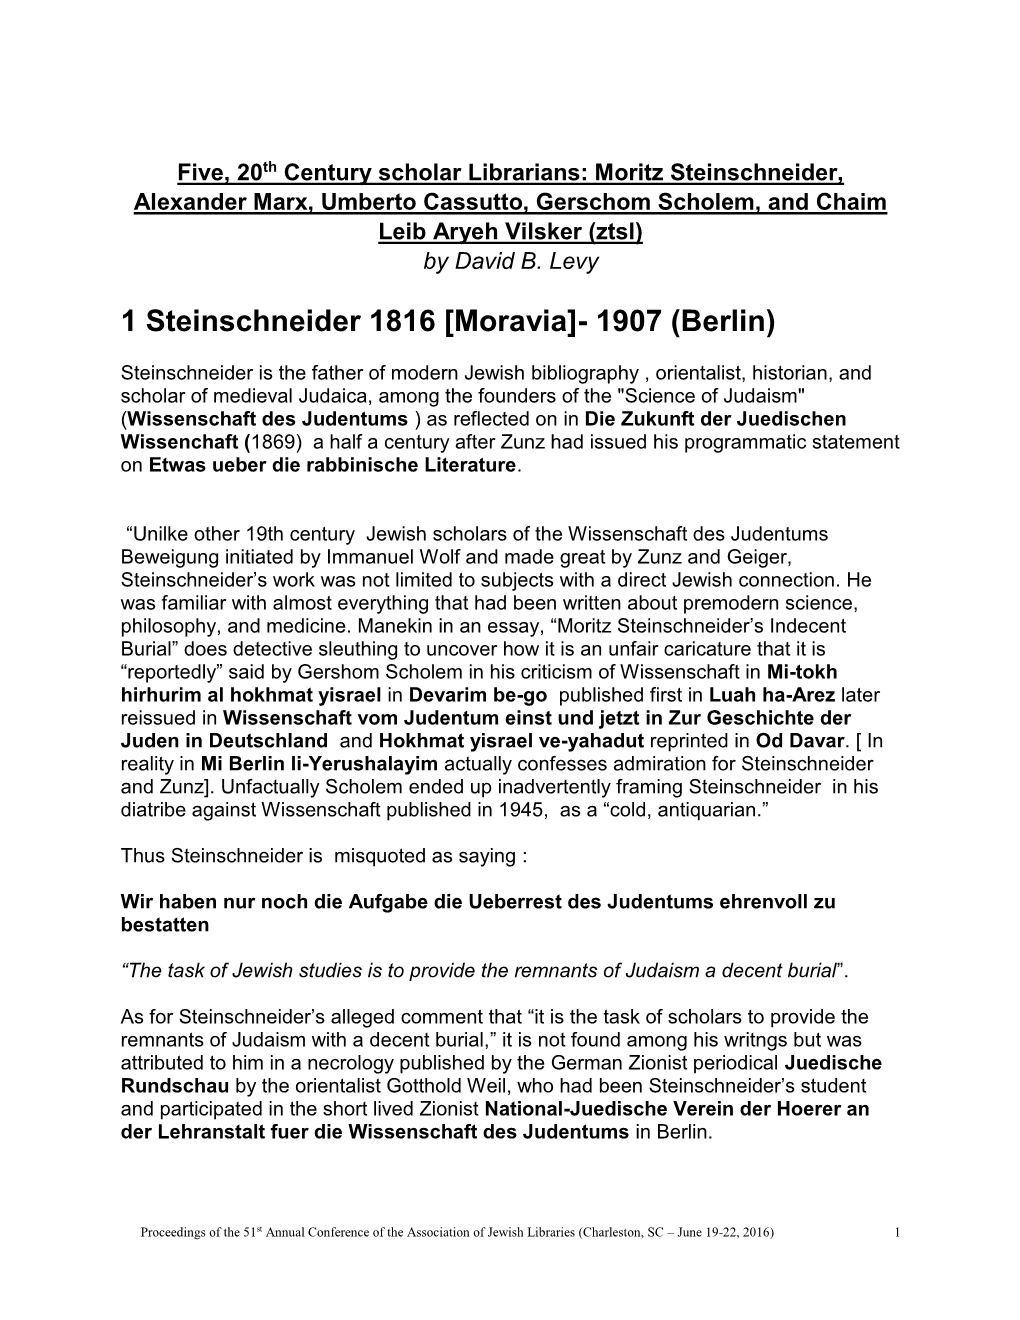 1 Steinschneider 1816 [Moravia]- 1907 (Berlin)